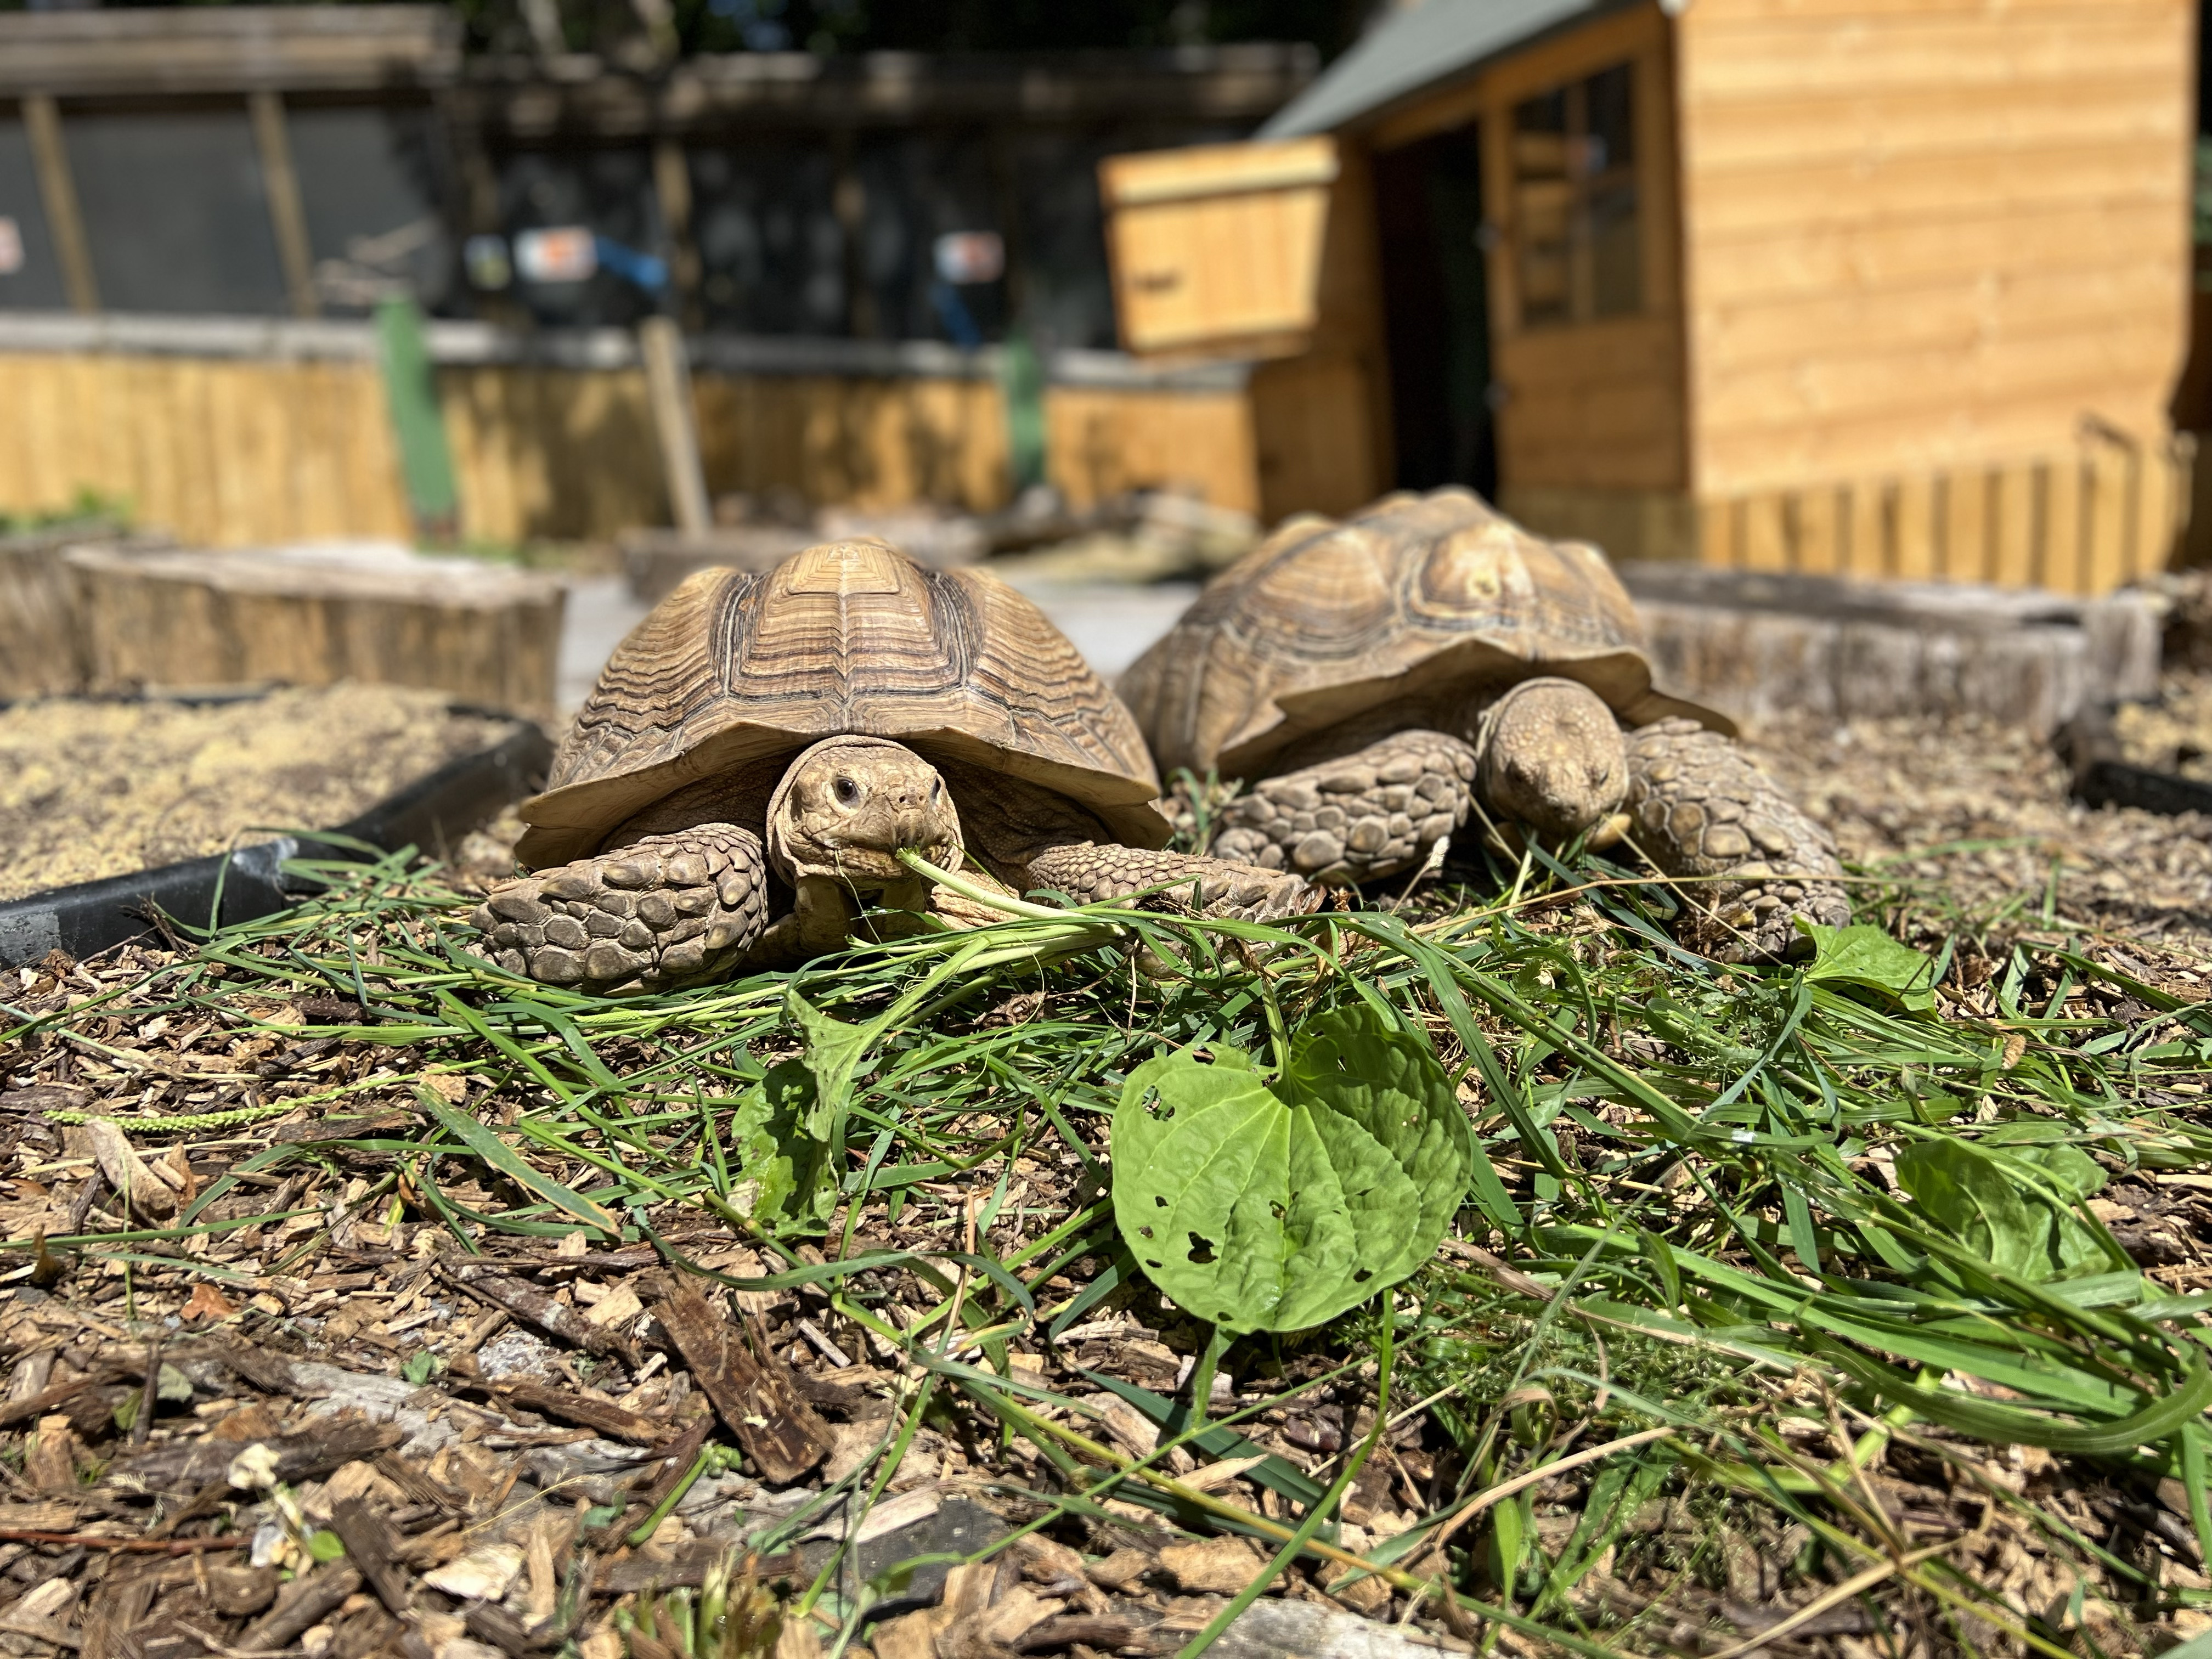 Two tortoises eating greens